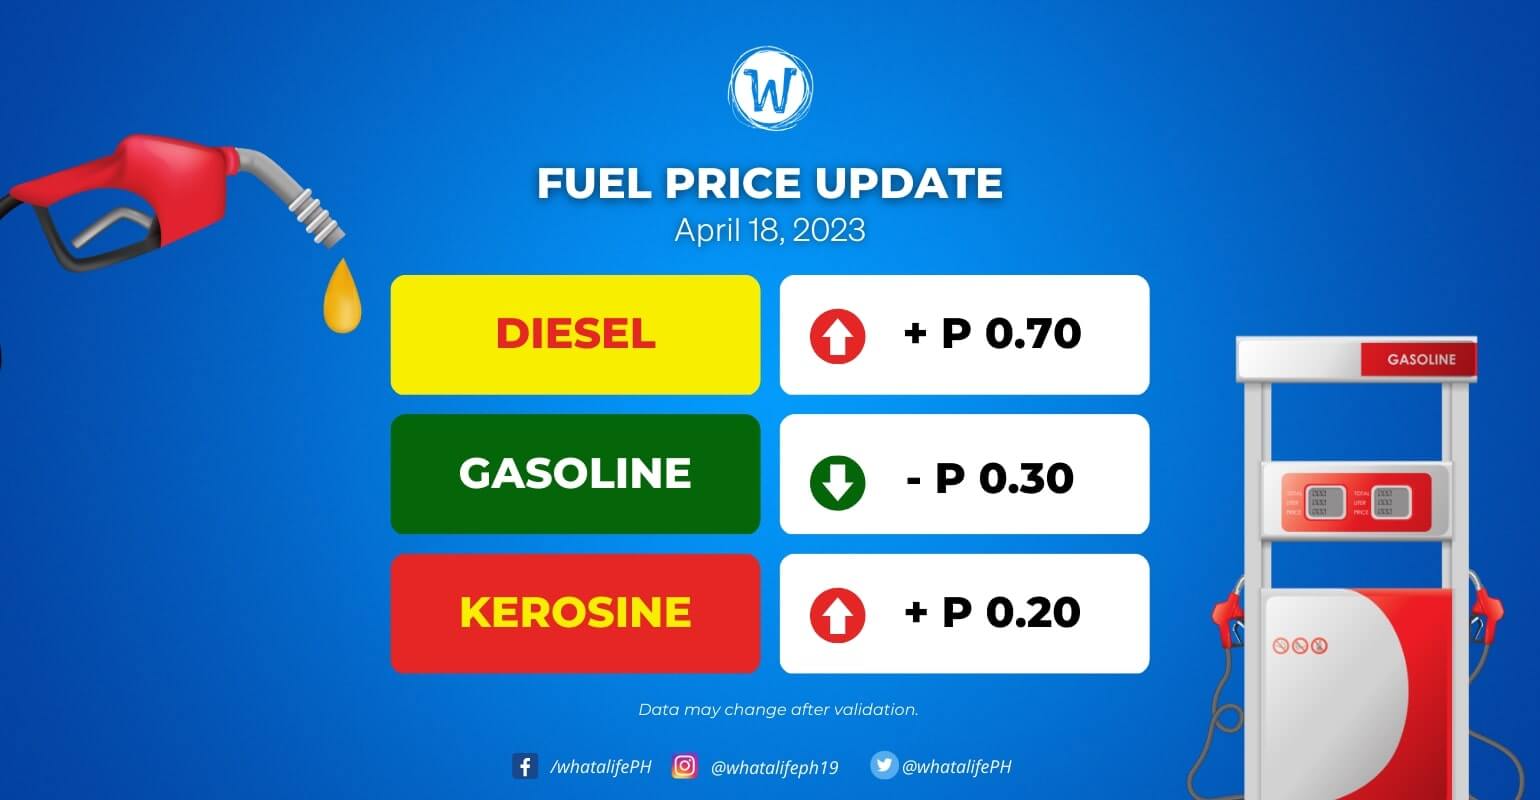 Fuel price adjustment effective April 18, 2023